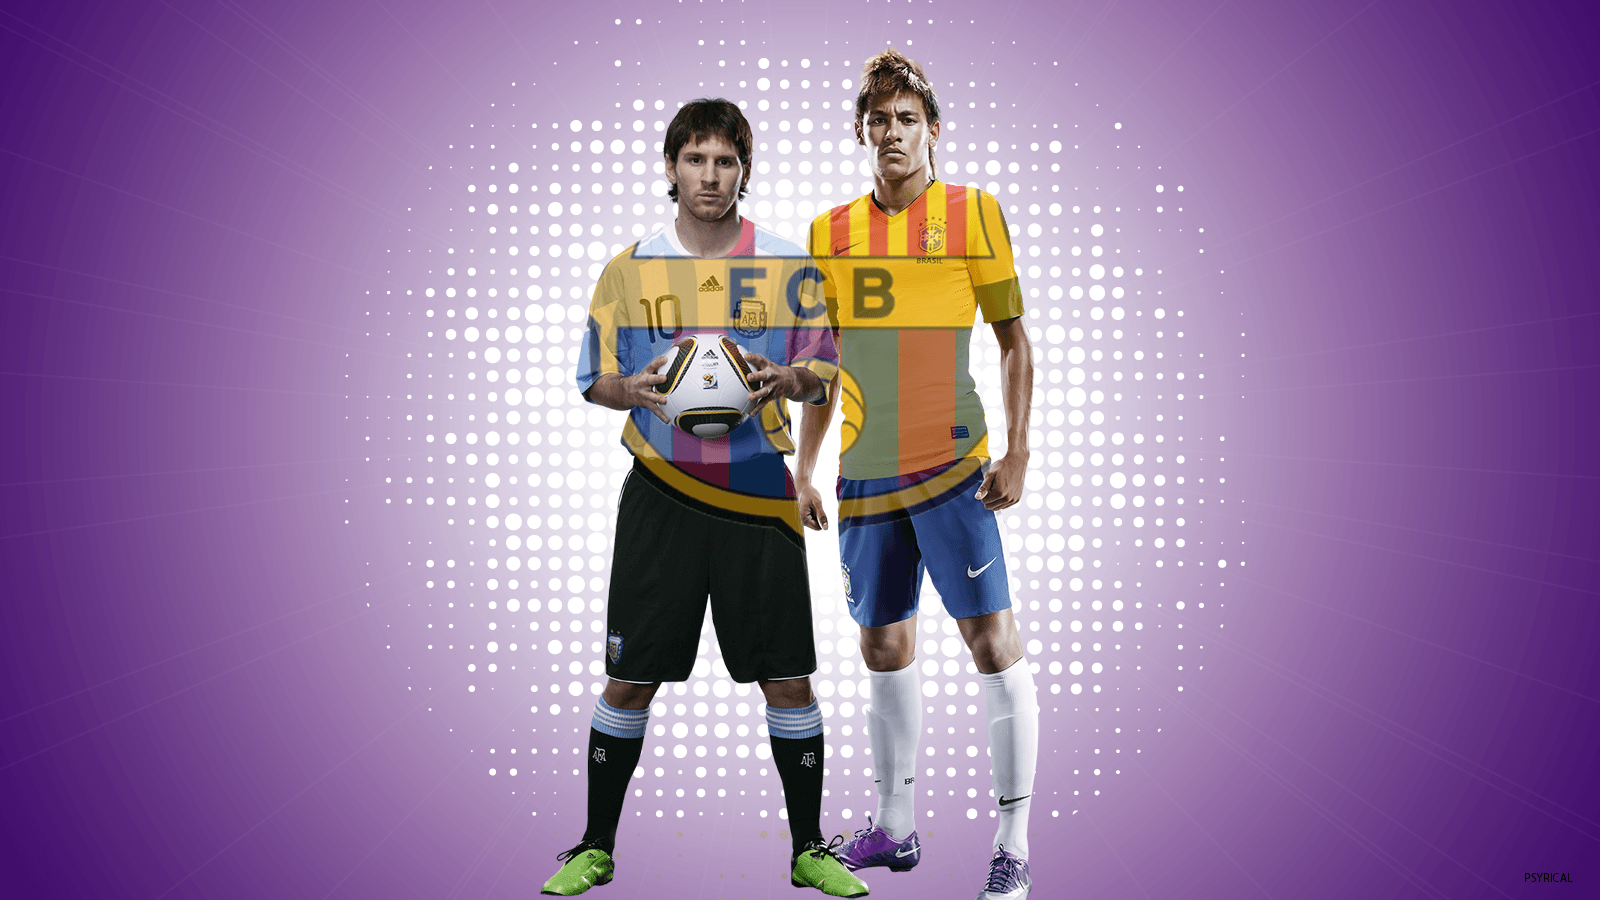 Neymar Barcelona 2013 Wallpaper For Desktop. A